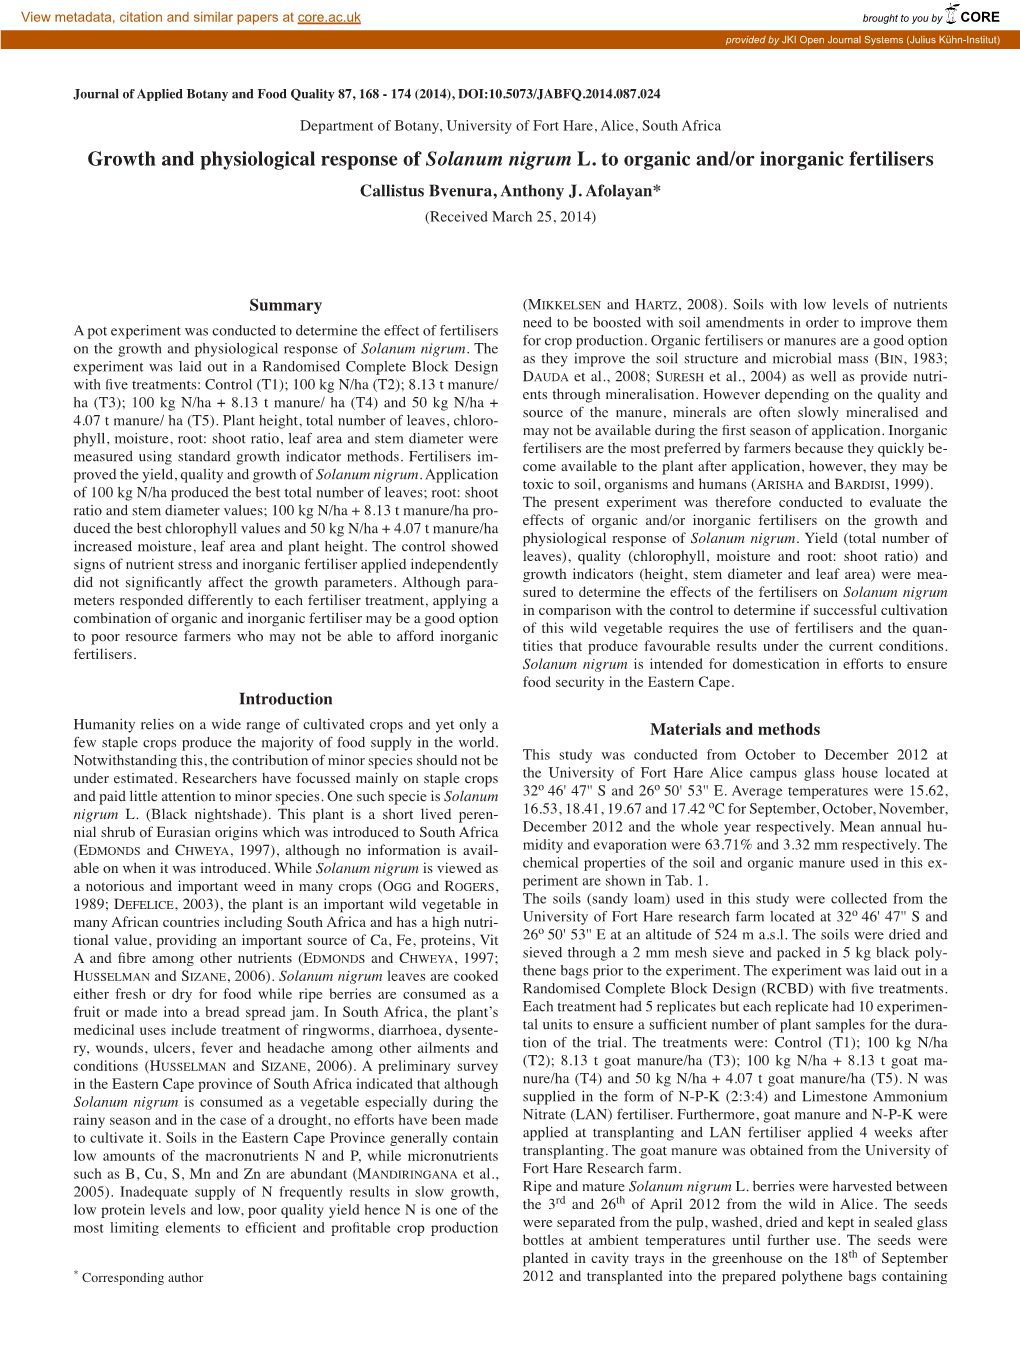 Growth and Physiological Response of Solanum Nigrum L. to Organic And/Or Inorganic Fertilisers Callistus Bvenura, Anthony J